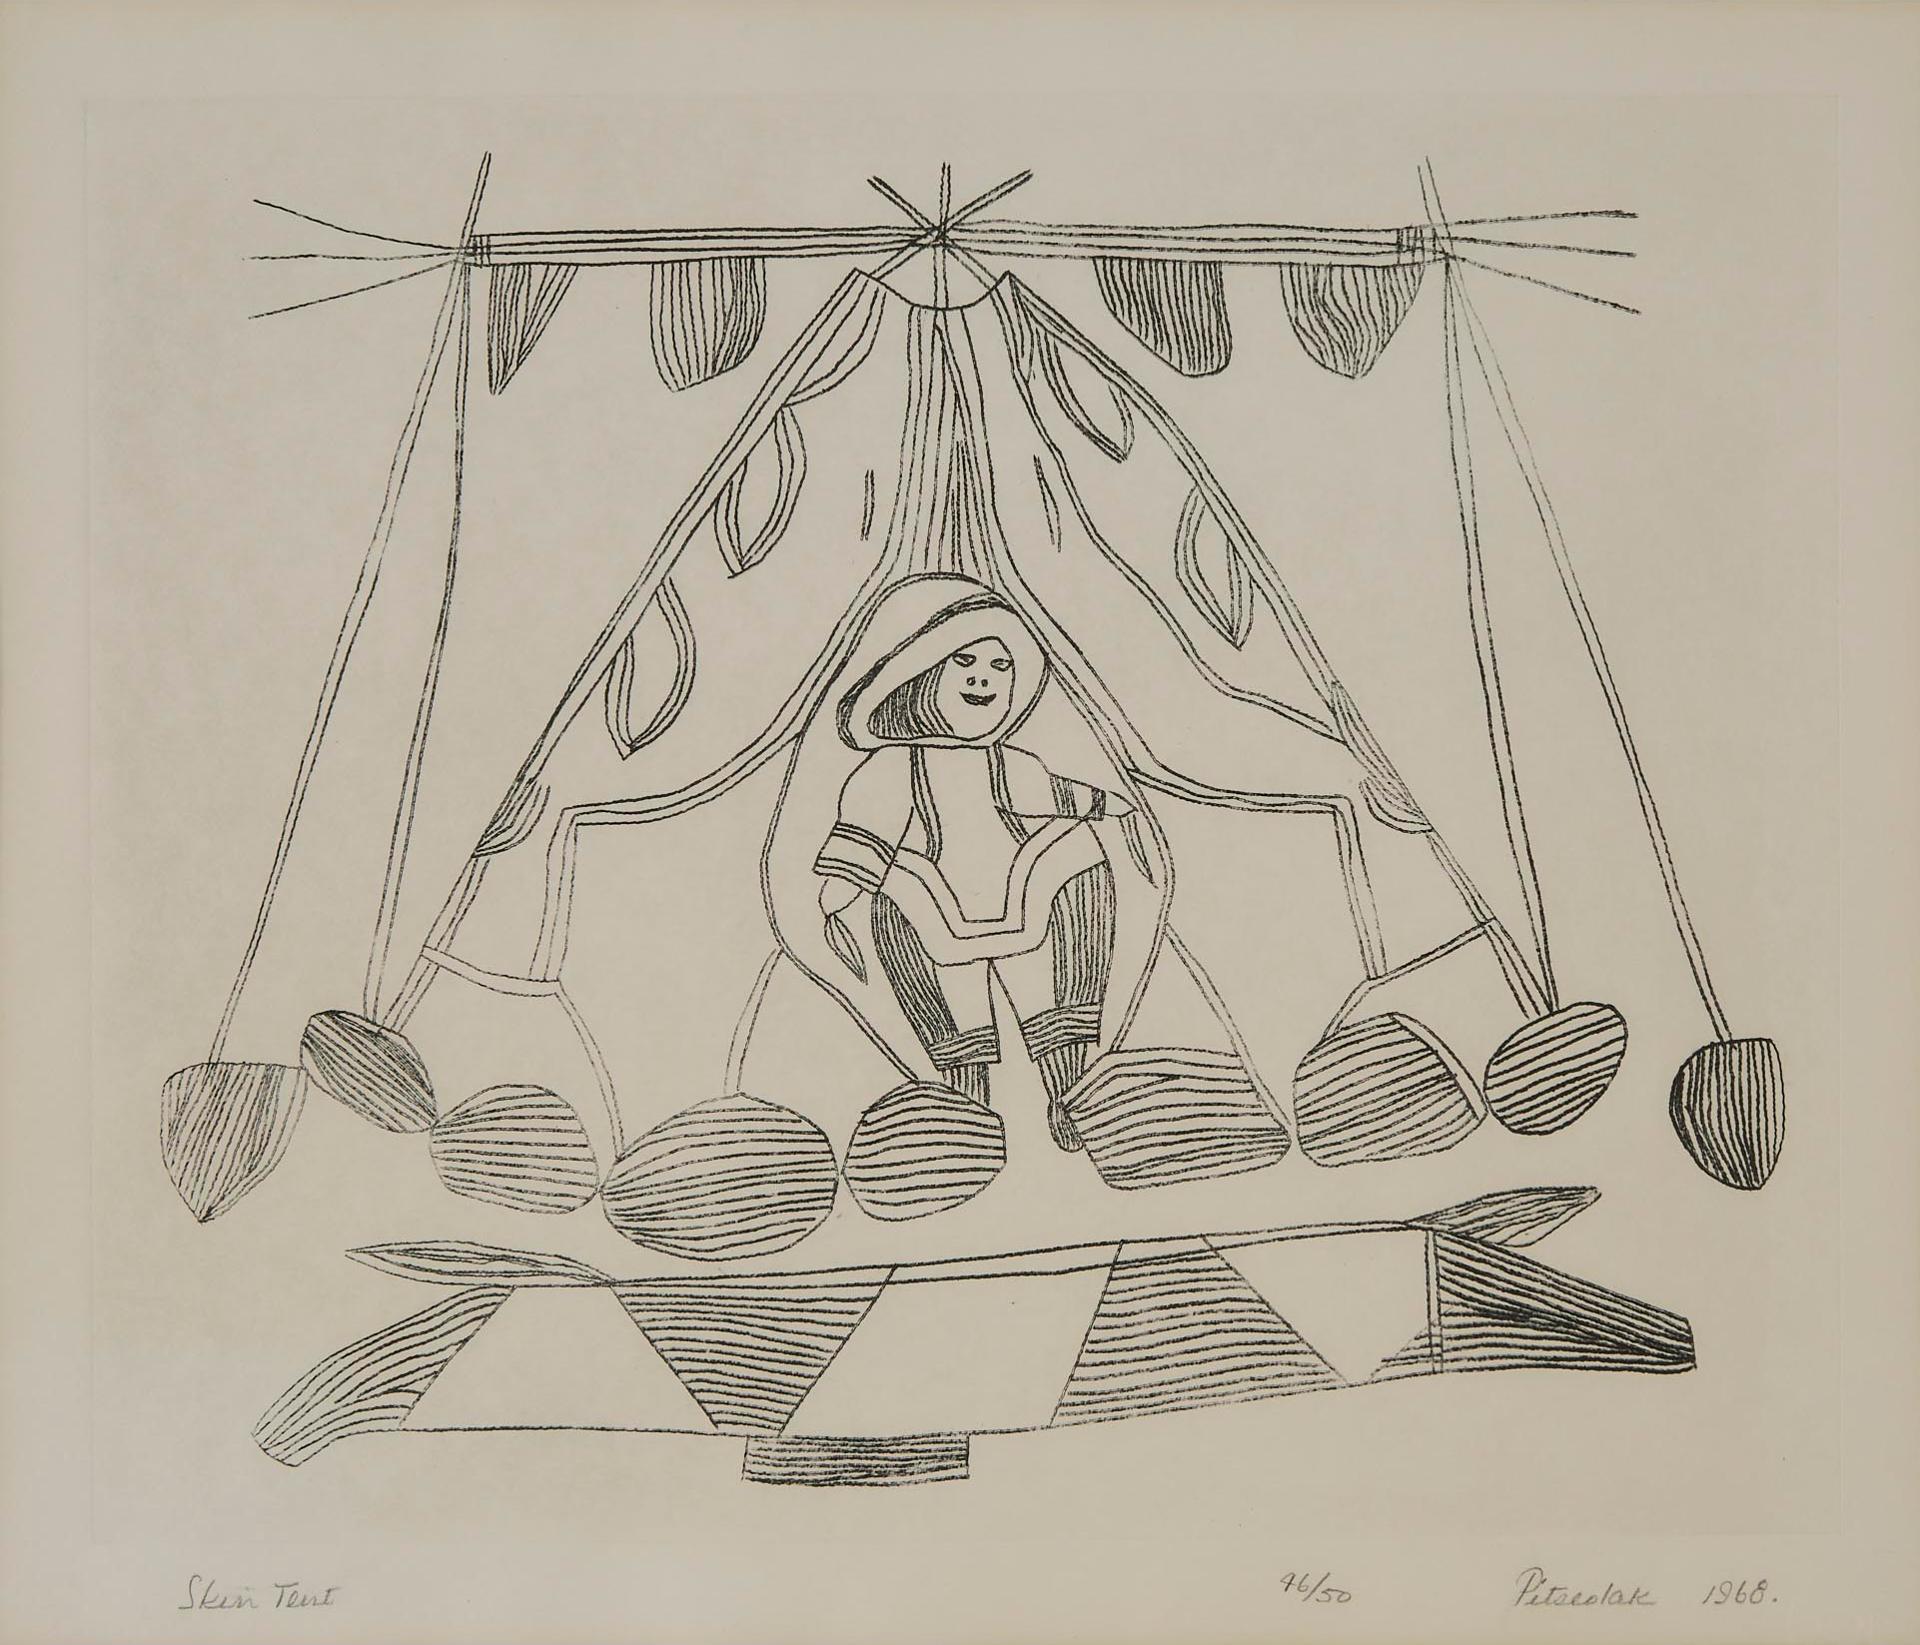 Pitseolak Ashoona (1904-1983) - Skin Tent